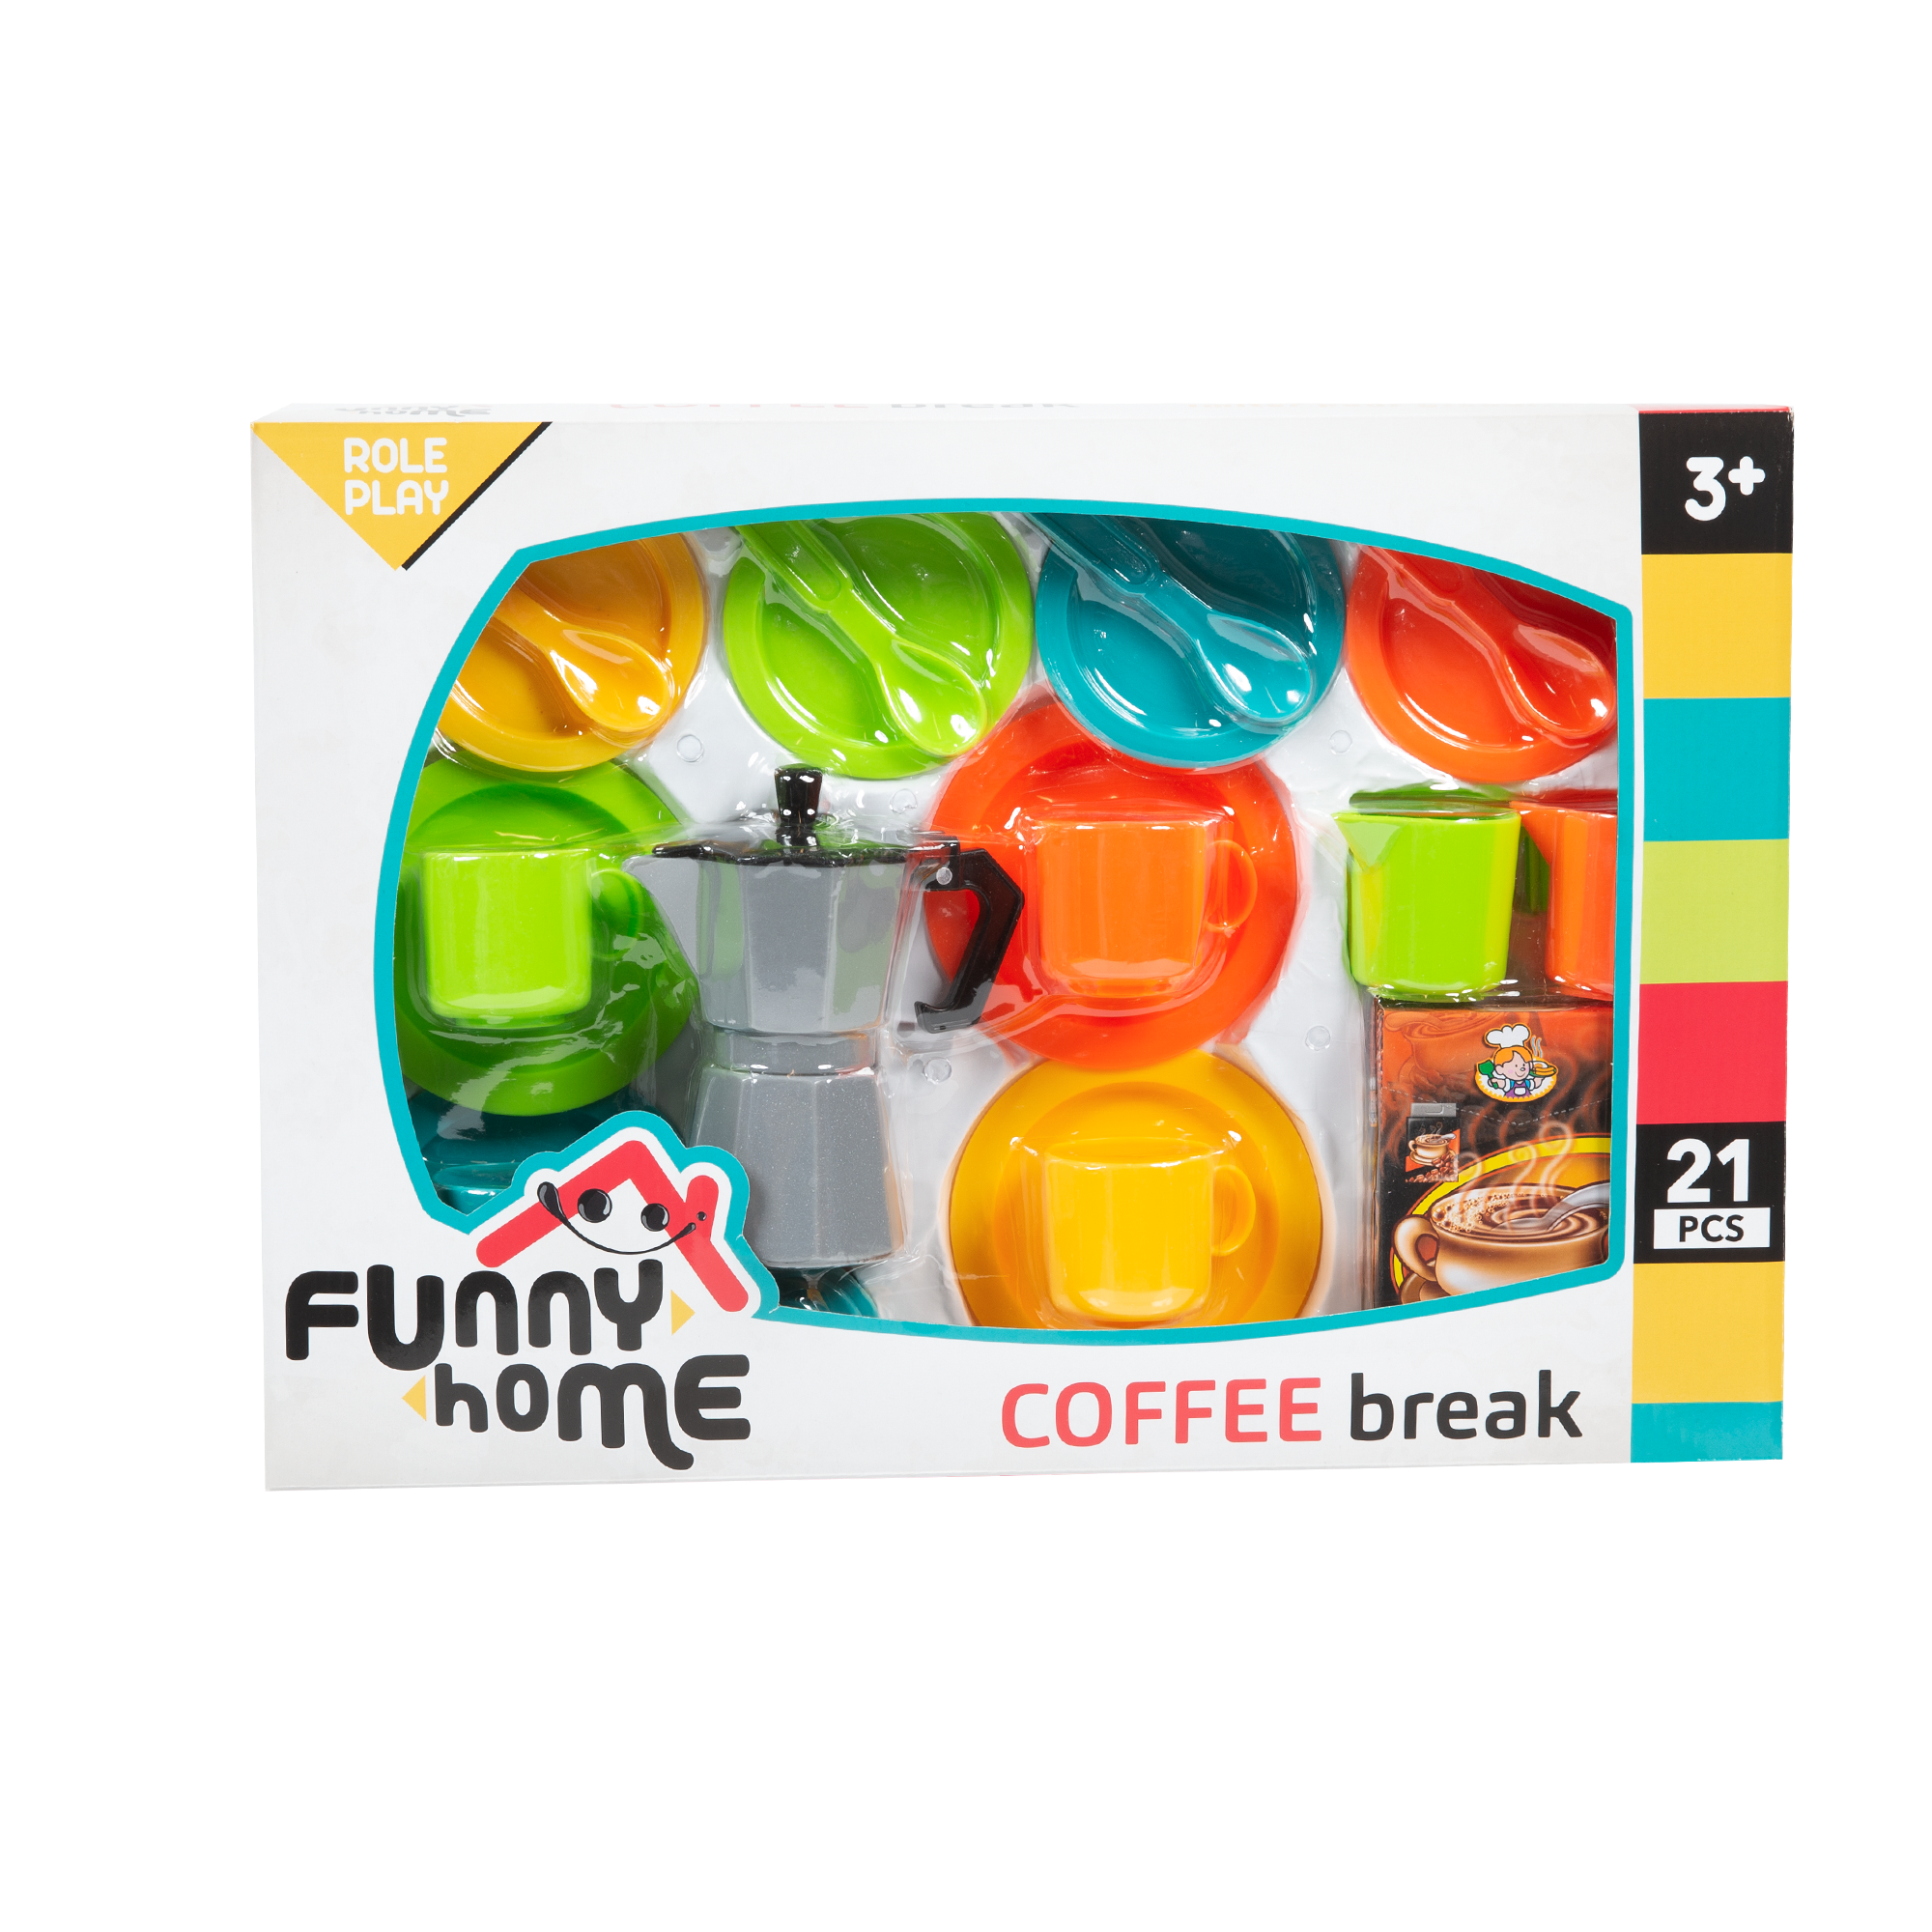 Coffee break - FUNNY HOME